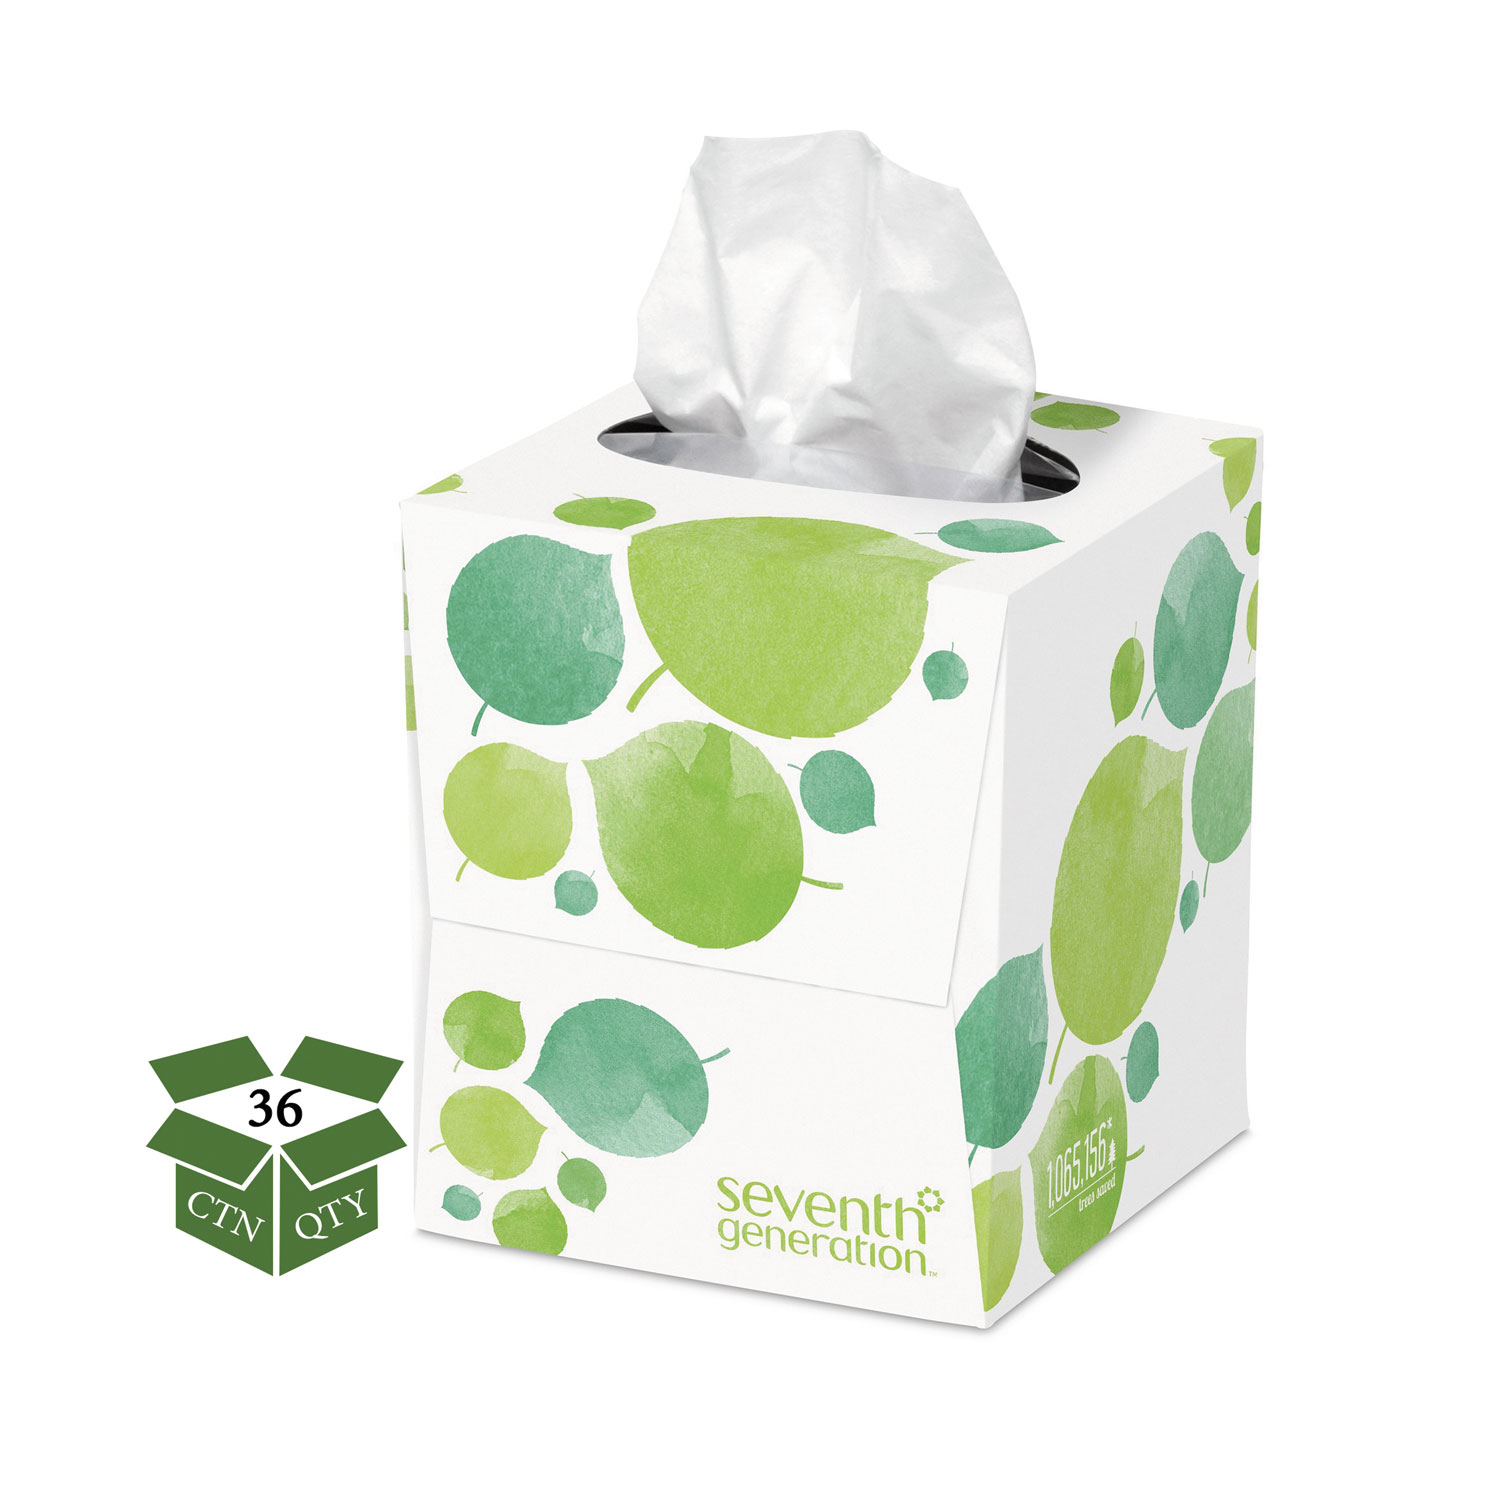  Seventh Generation SEV 13719 100% Recycled Facial Tissue, 2-Ply, 85 Sheets/Box, 36 Boxes/Carton (SEV13719CT) 